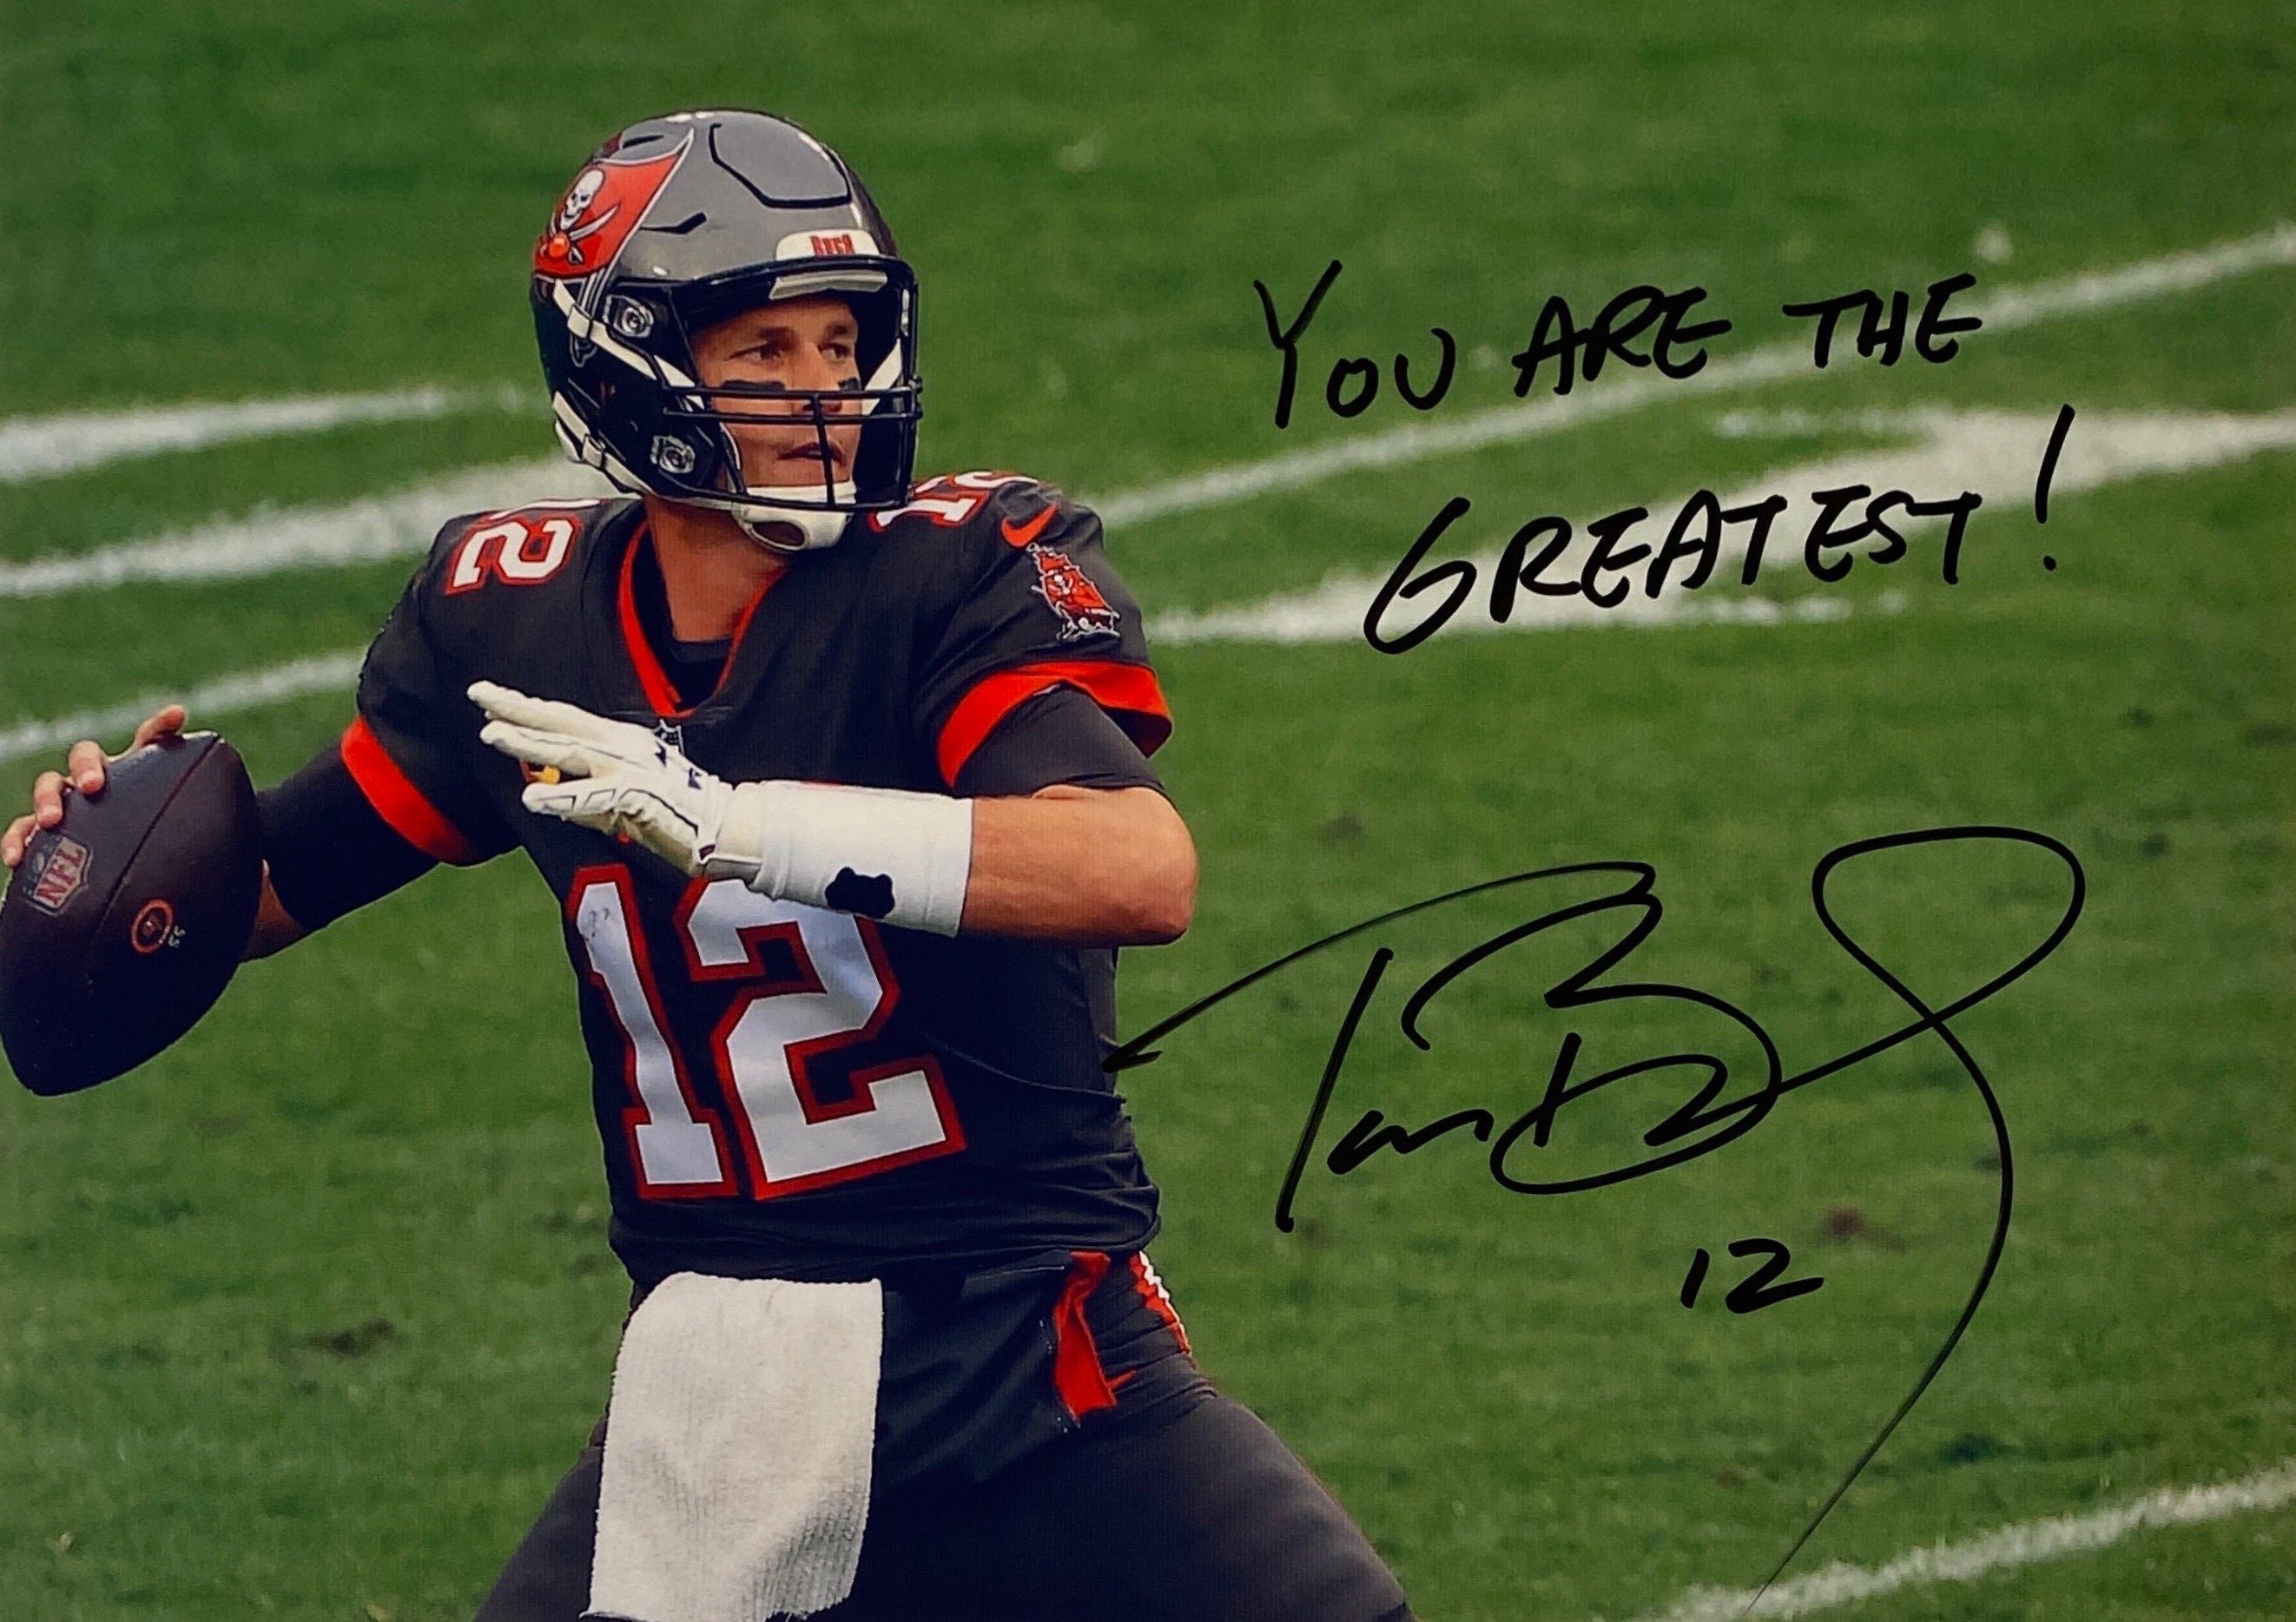 Tom Brady Signed Helmet Football GOAT NE Patriots #12 Autograph